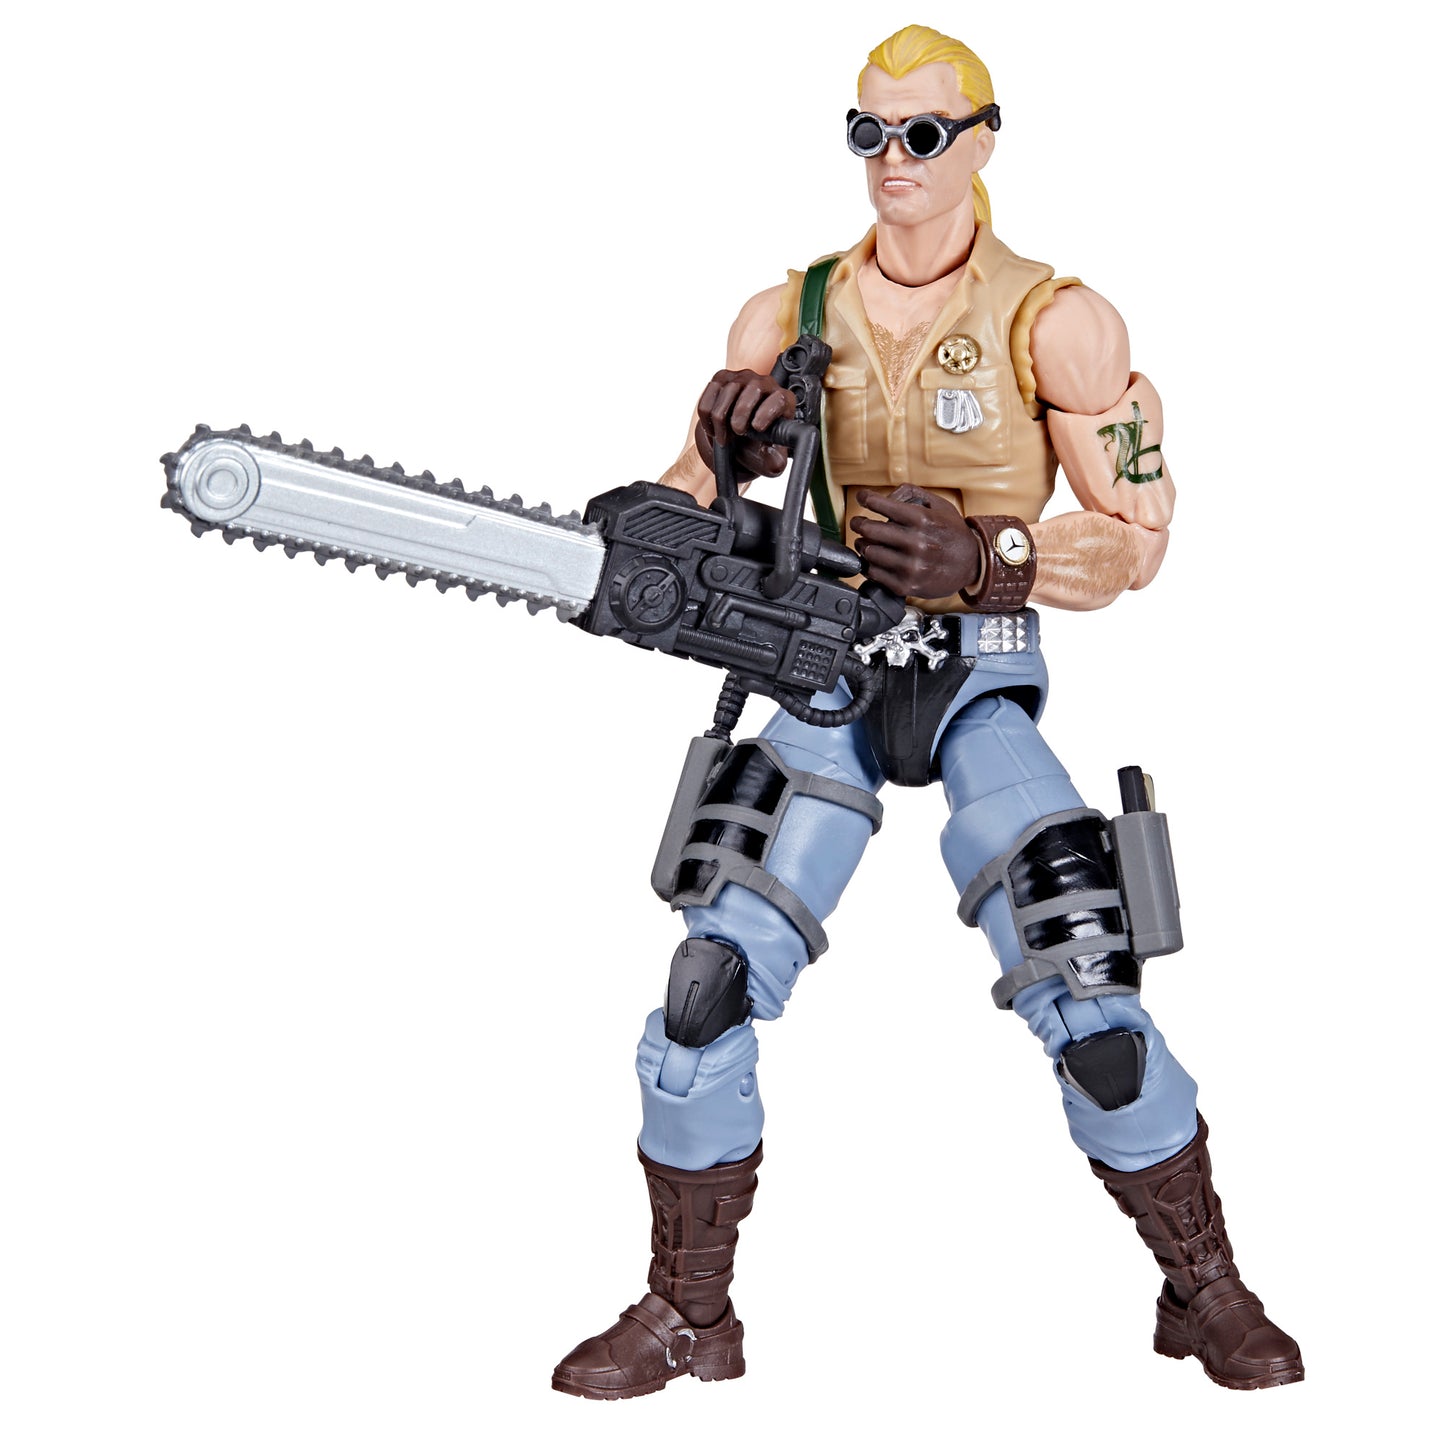  G.I. Joe Classified Series Dreadnok Buzzer, Collectible G.I. Joe Action Figure (6"), 106 HERETOSERVEYOU 2